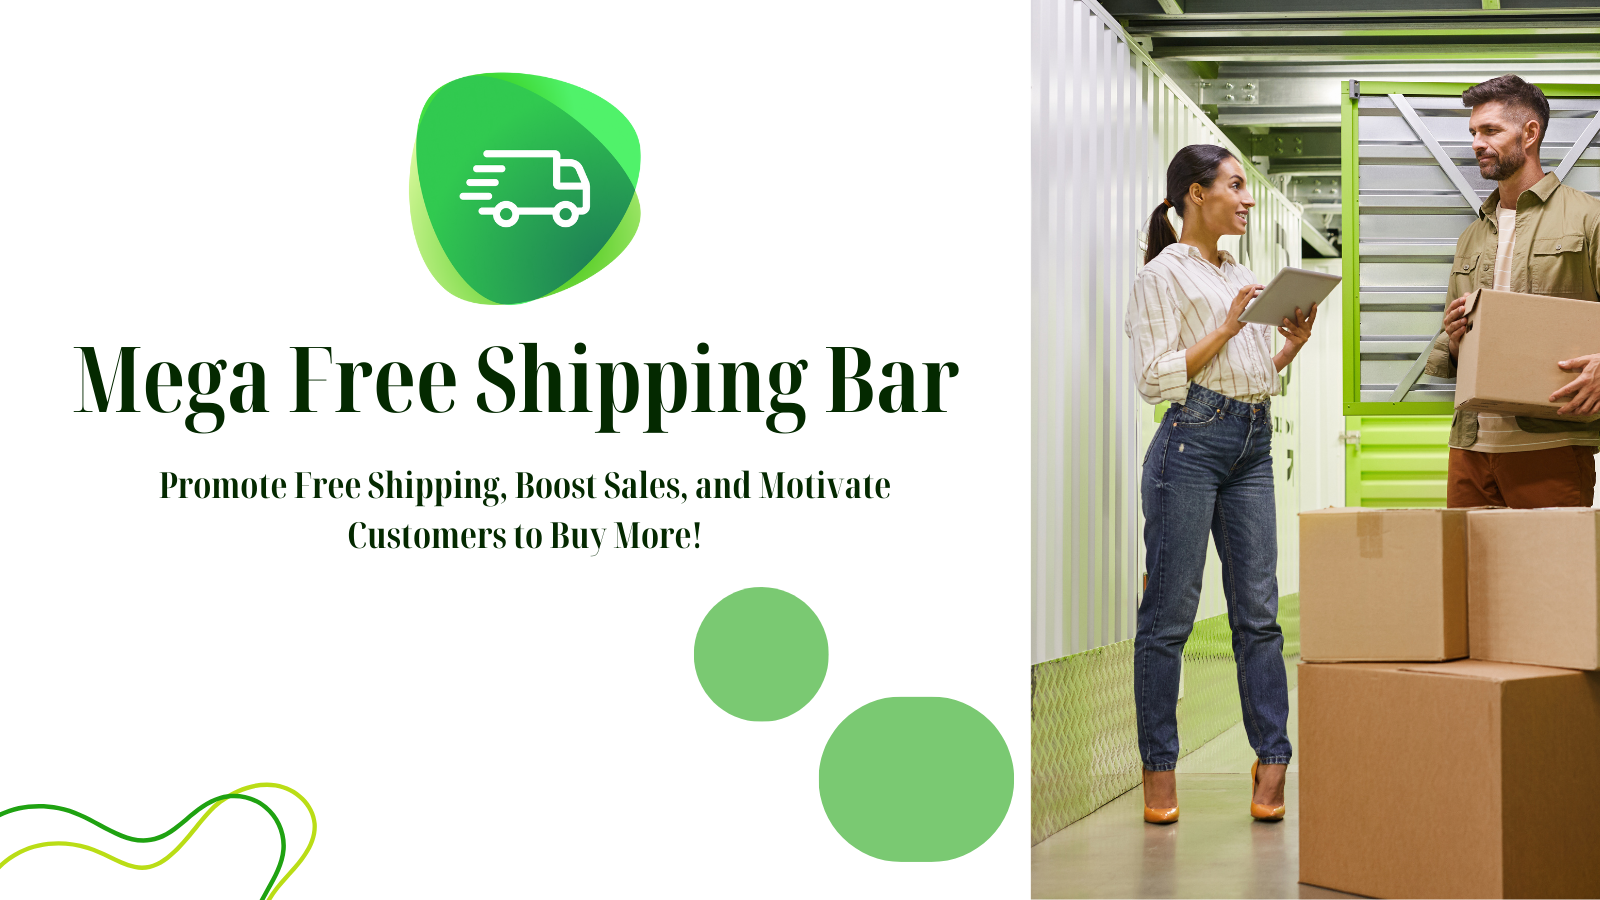 Mega Free Shipping Bar - Promote Free Shipping, Boost Sales